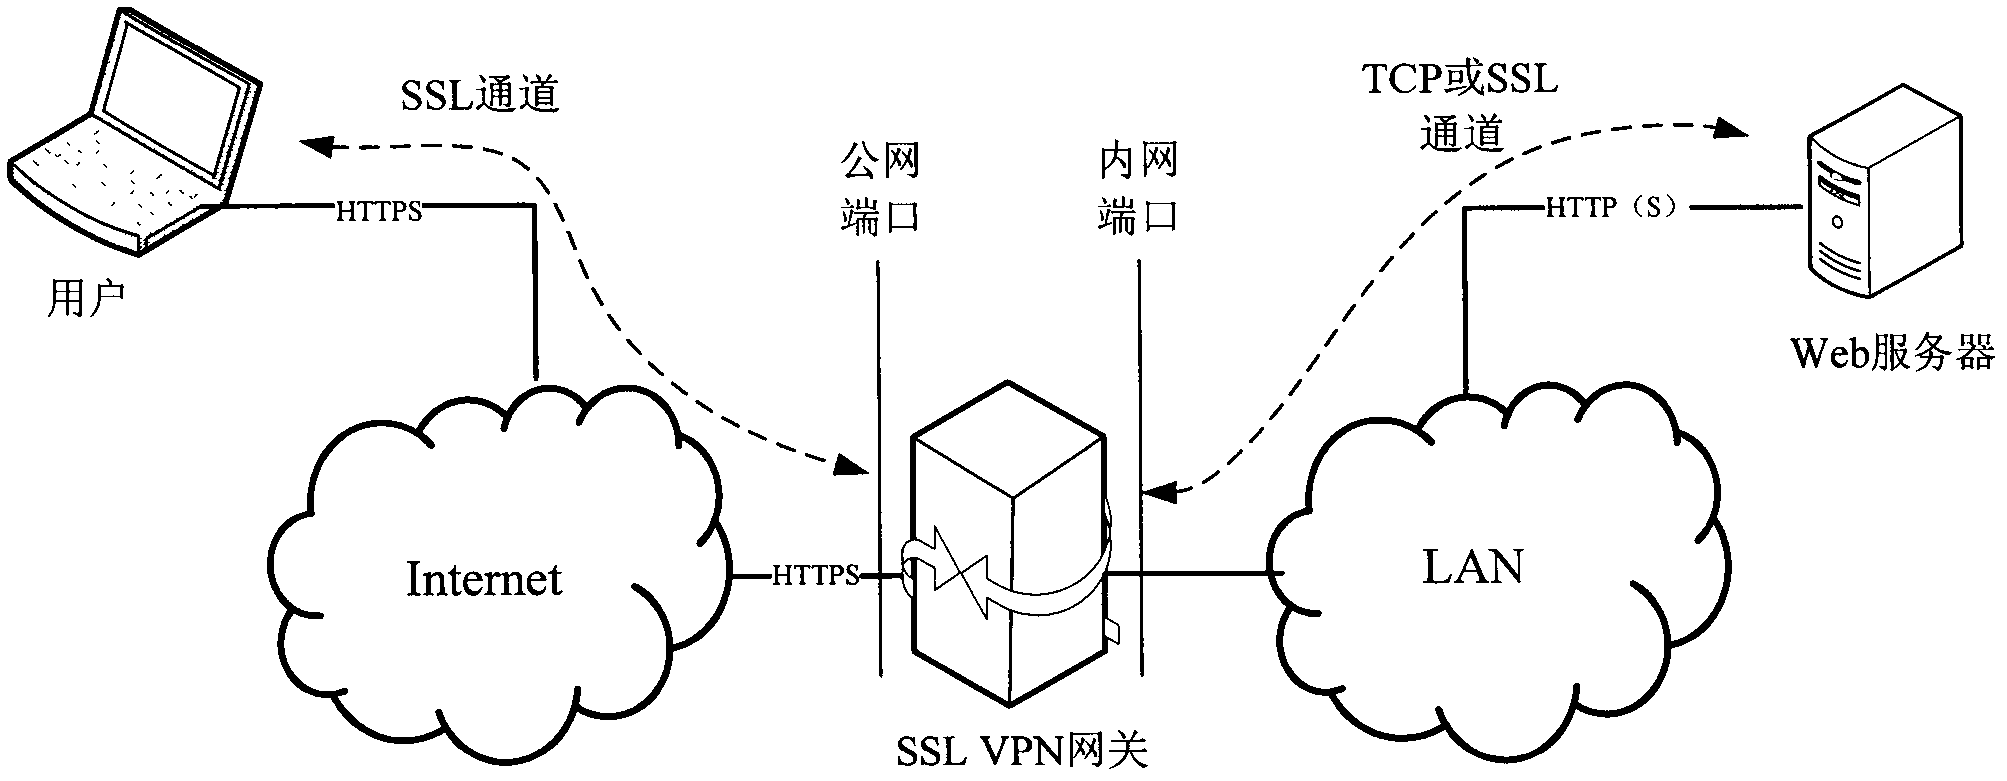 SSL VPN equipment-based Web resource authentication information management method